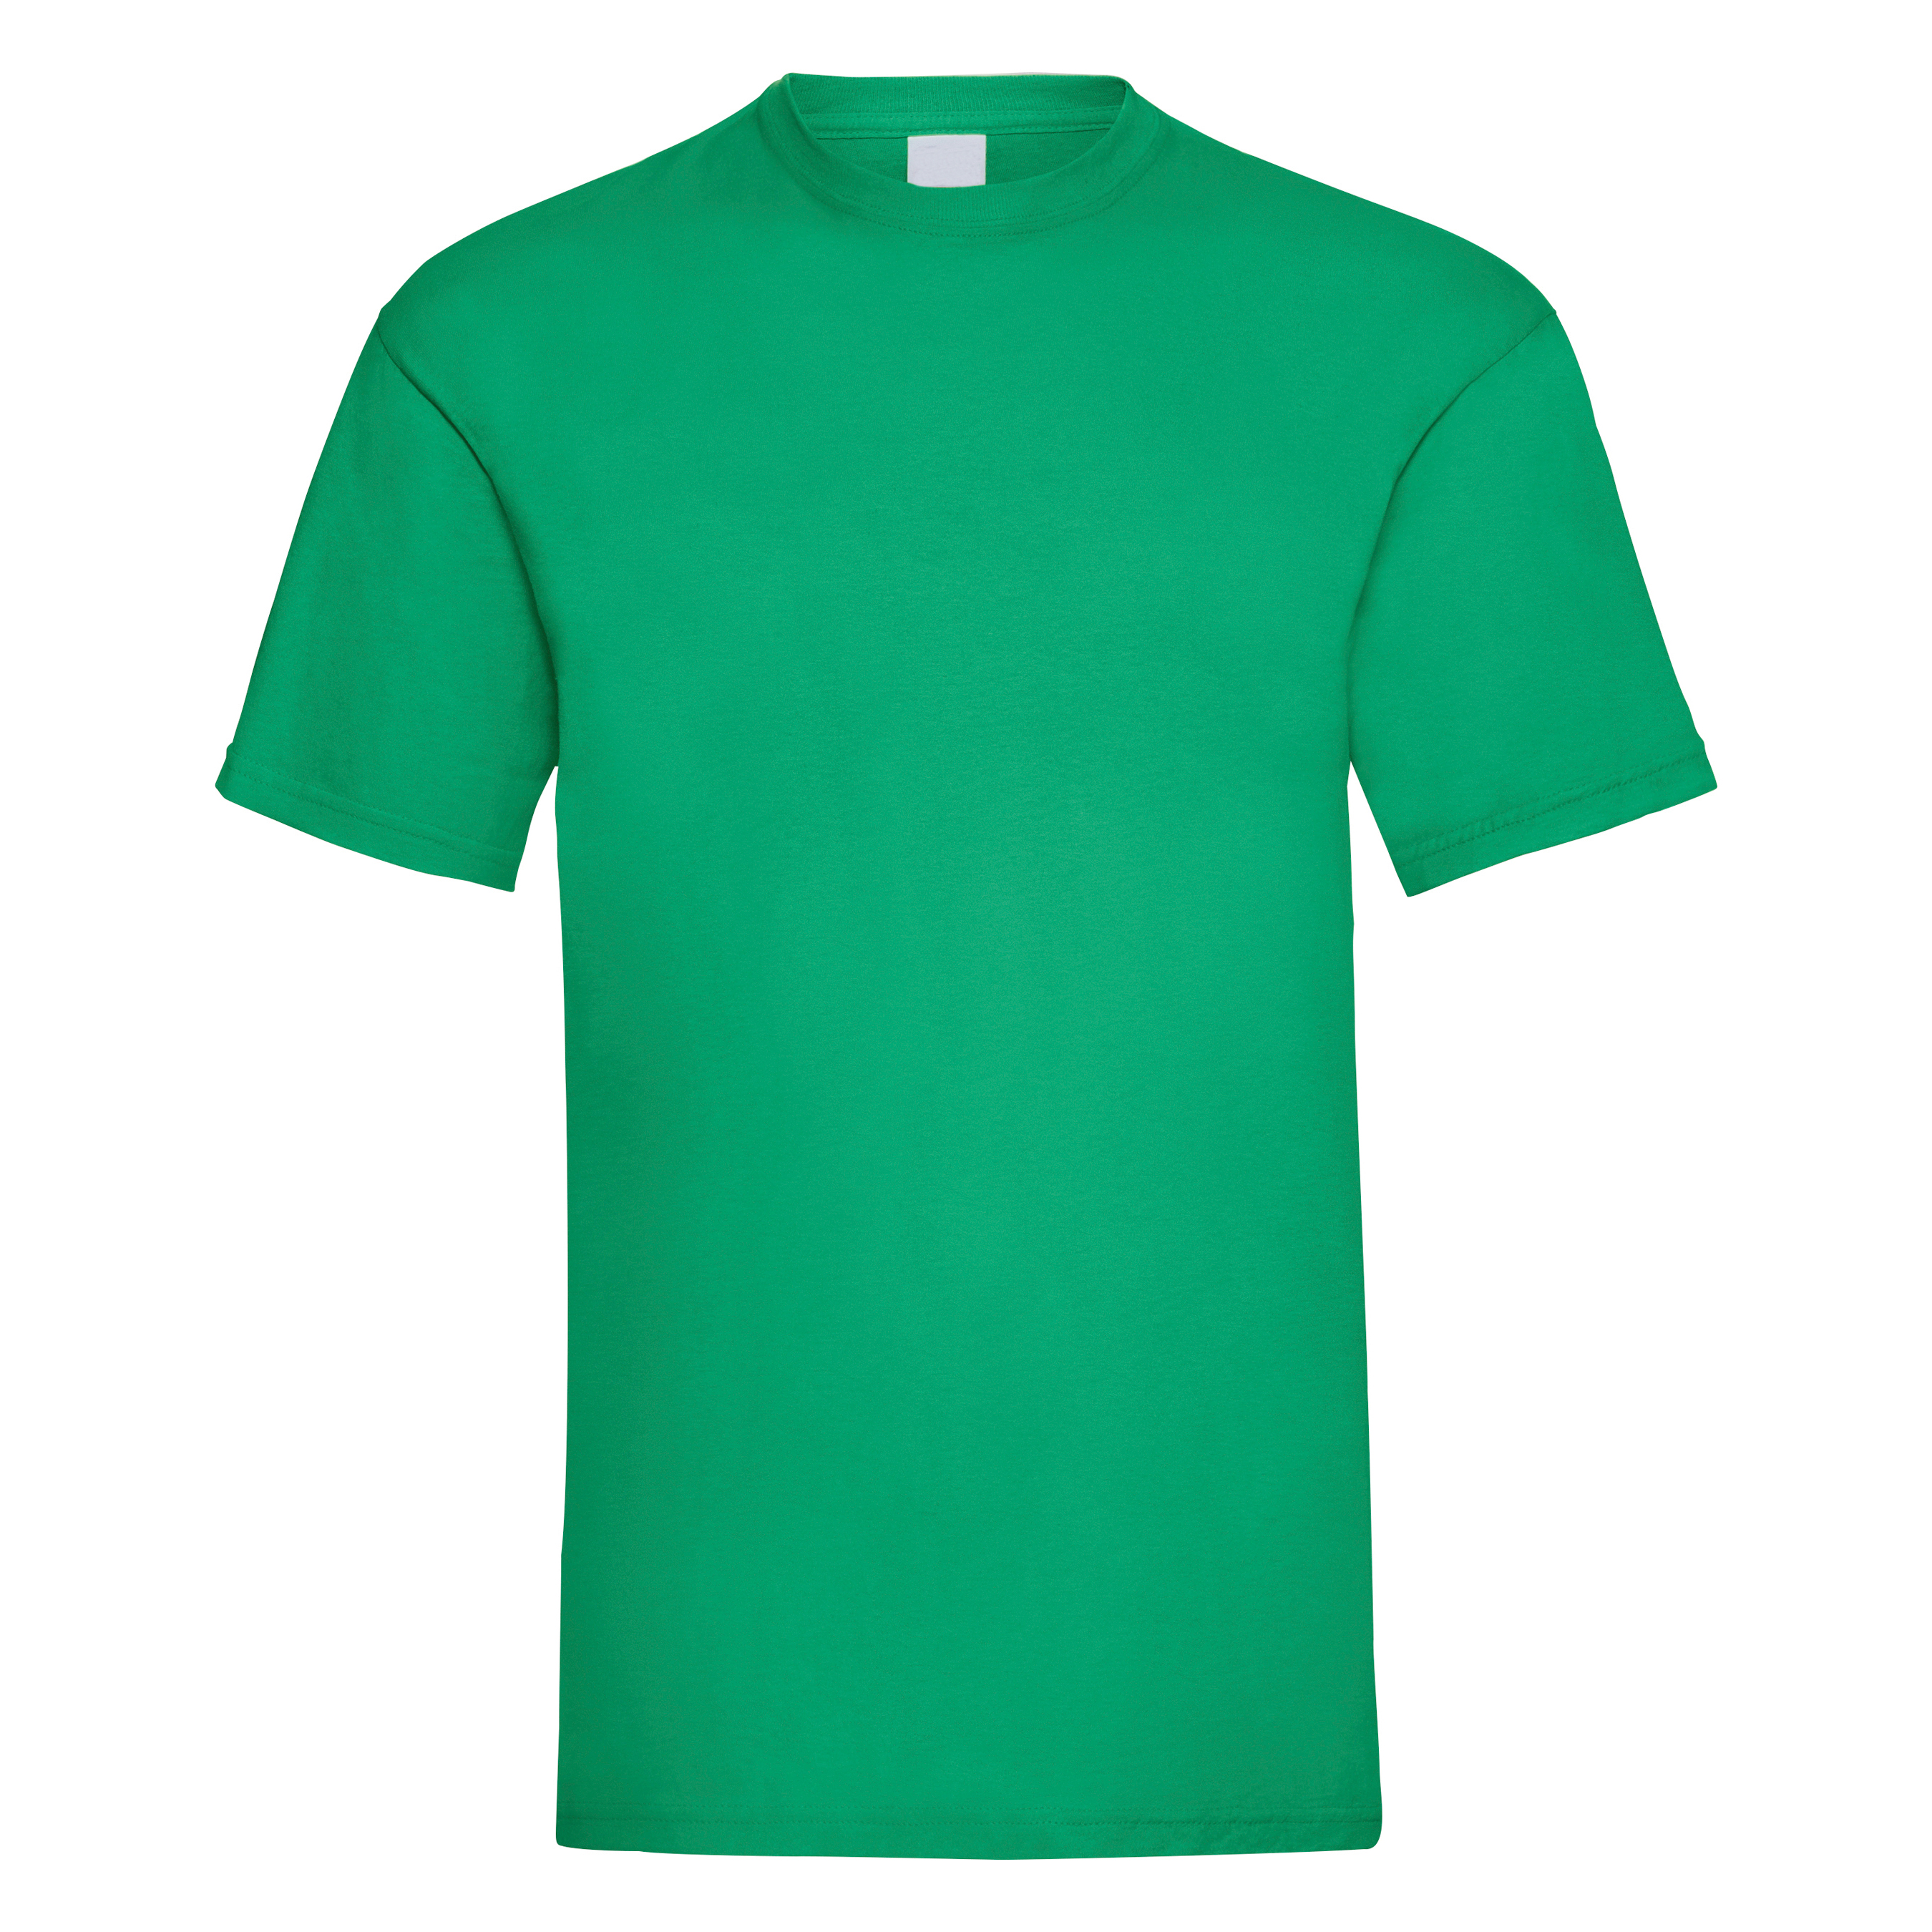 Valor Mensal Camiseta De Manga Curta Casual Universal Textiles (Verde)